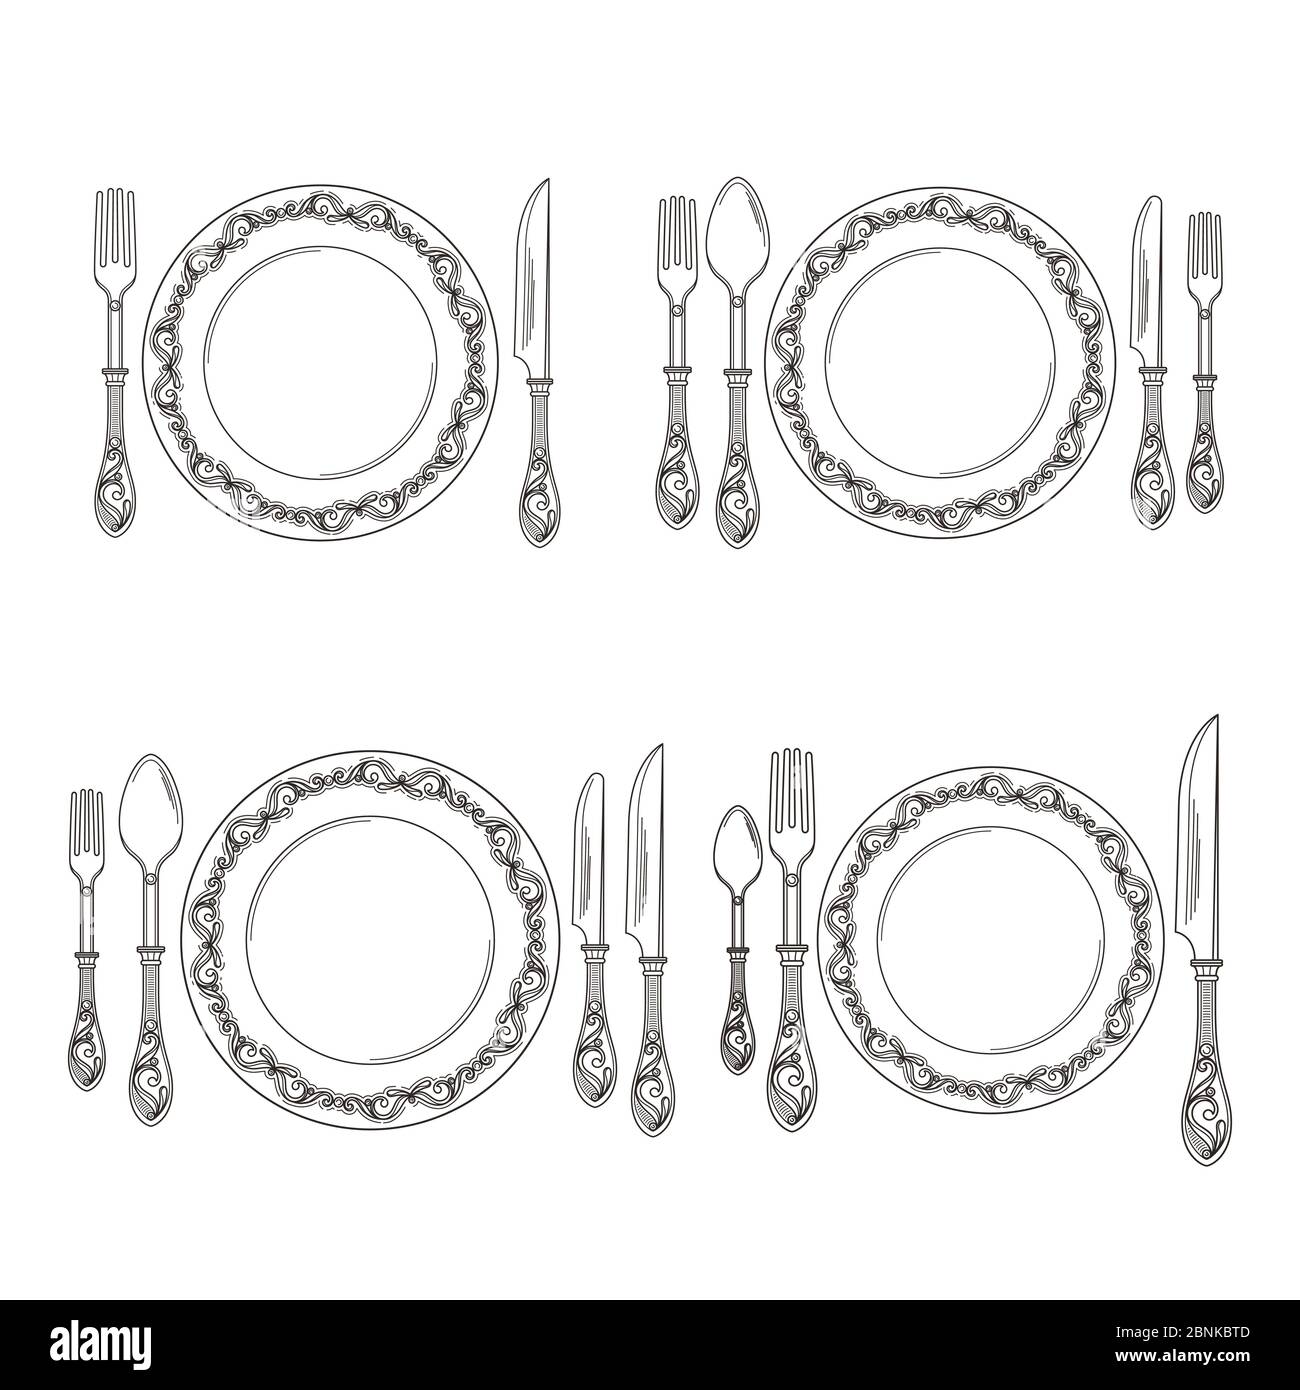 Vector variations of cutlery arrangement set illustration Stock Vector